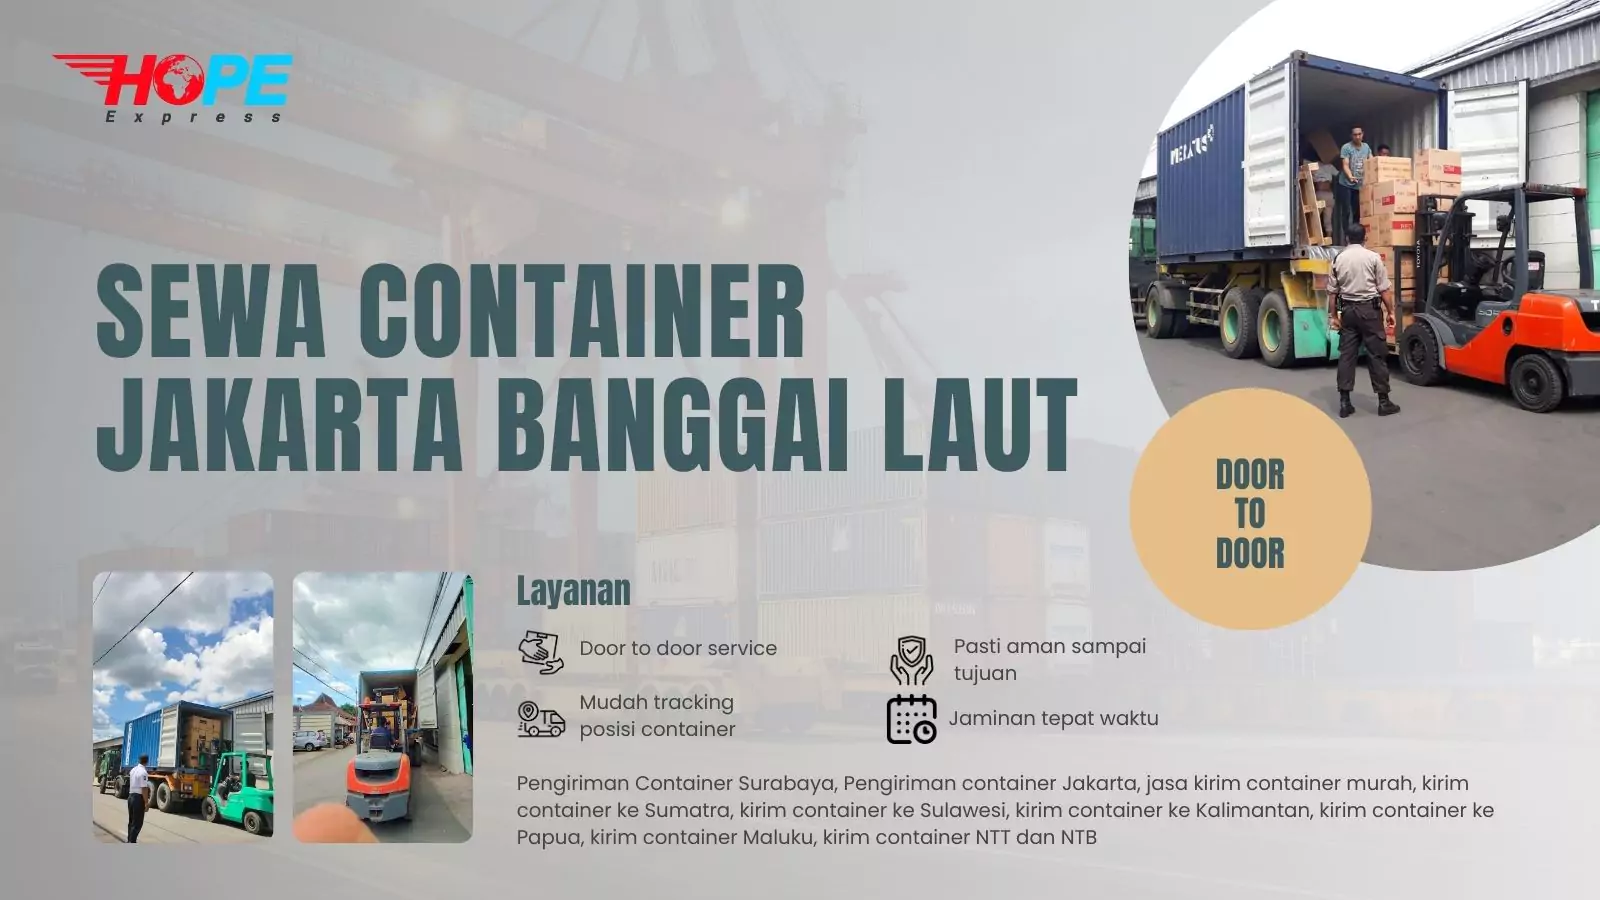 Sewa Container Jakarta Banggai Laut